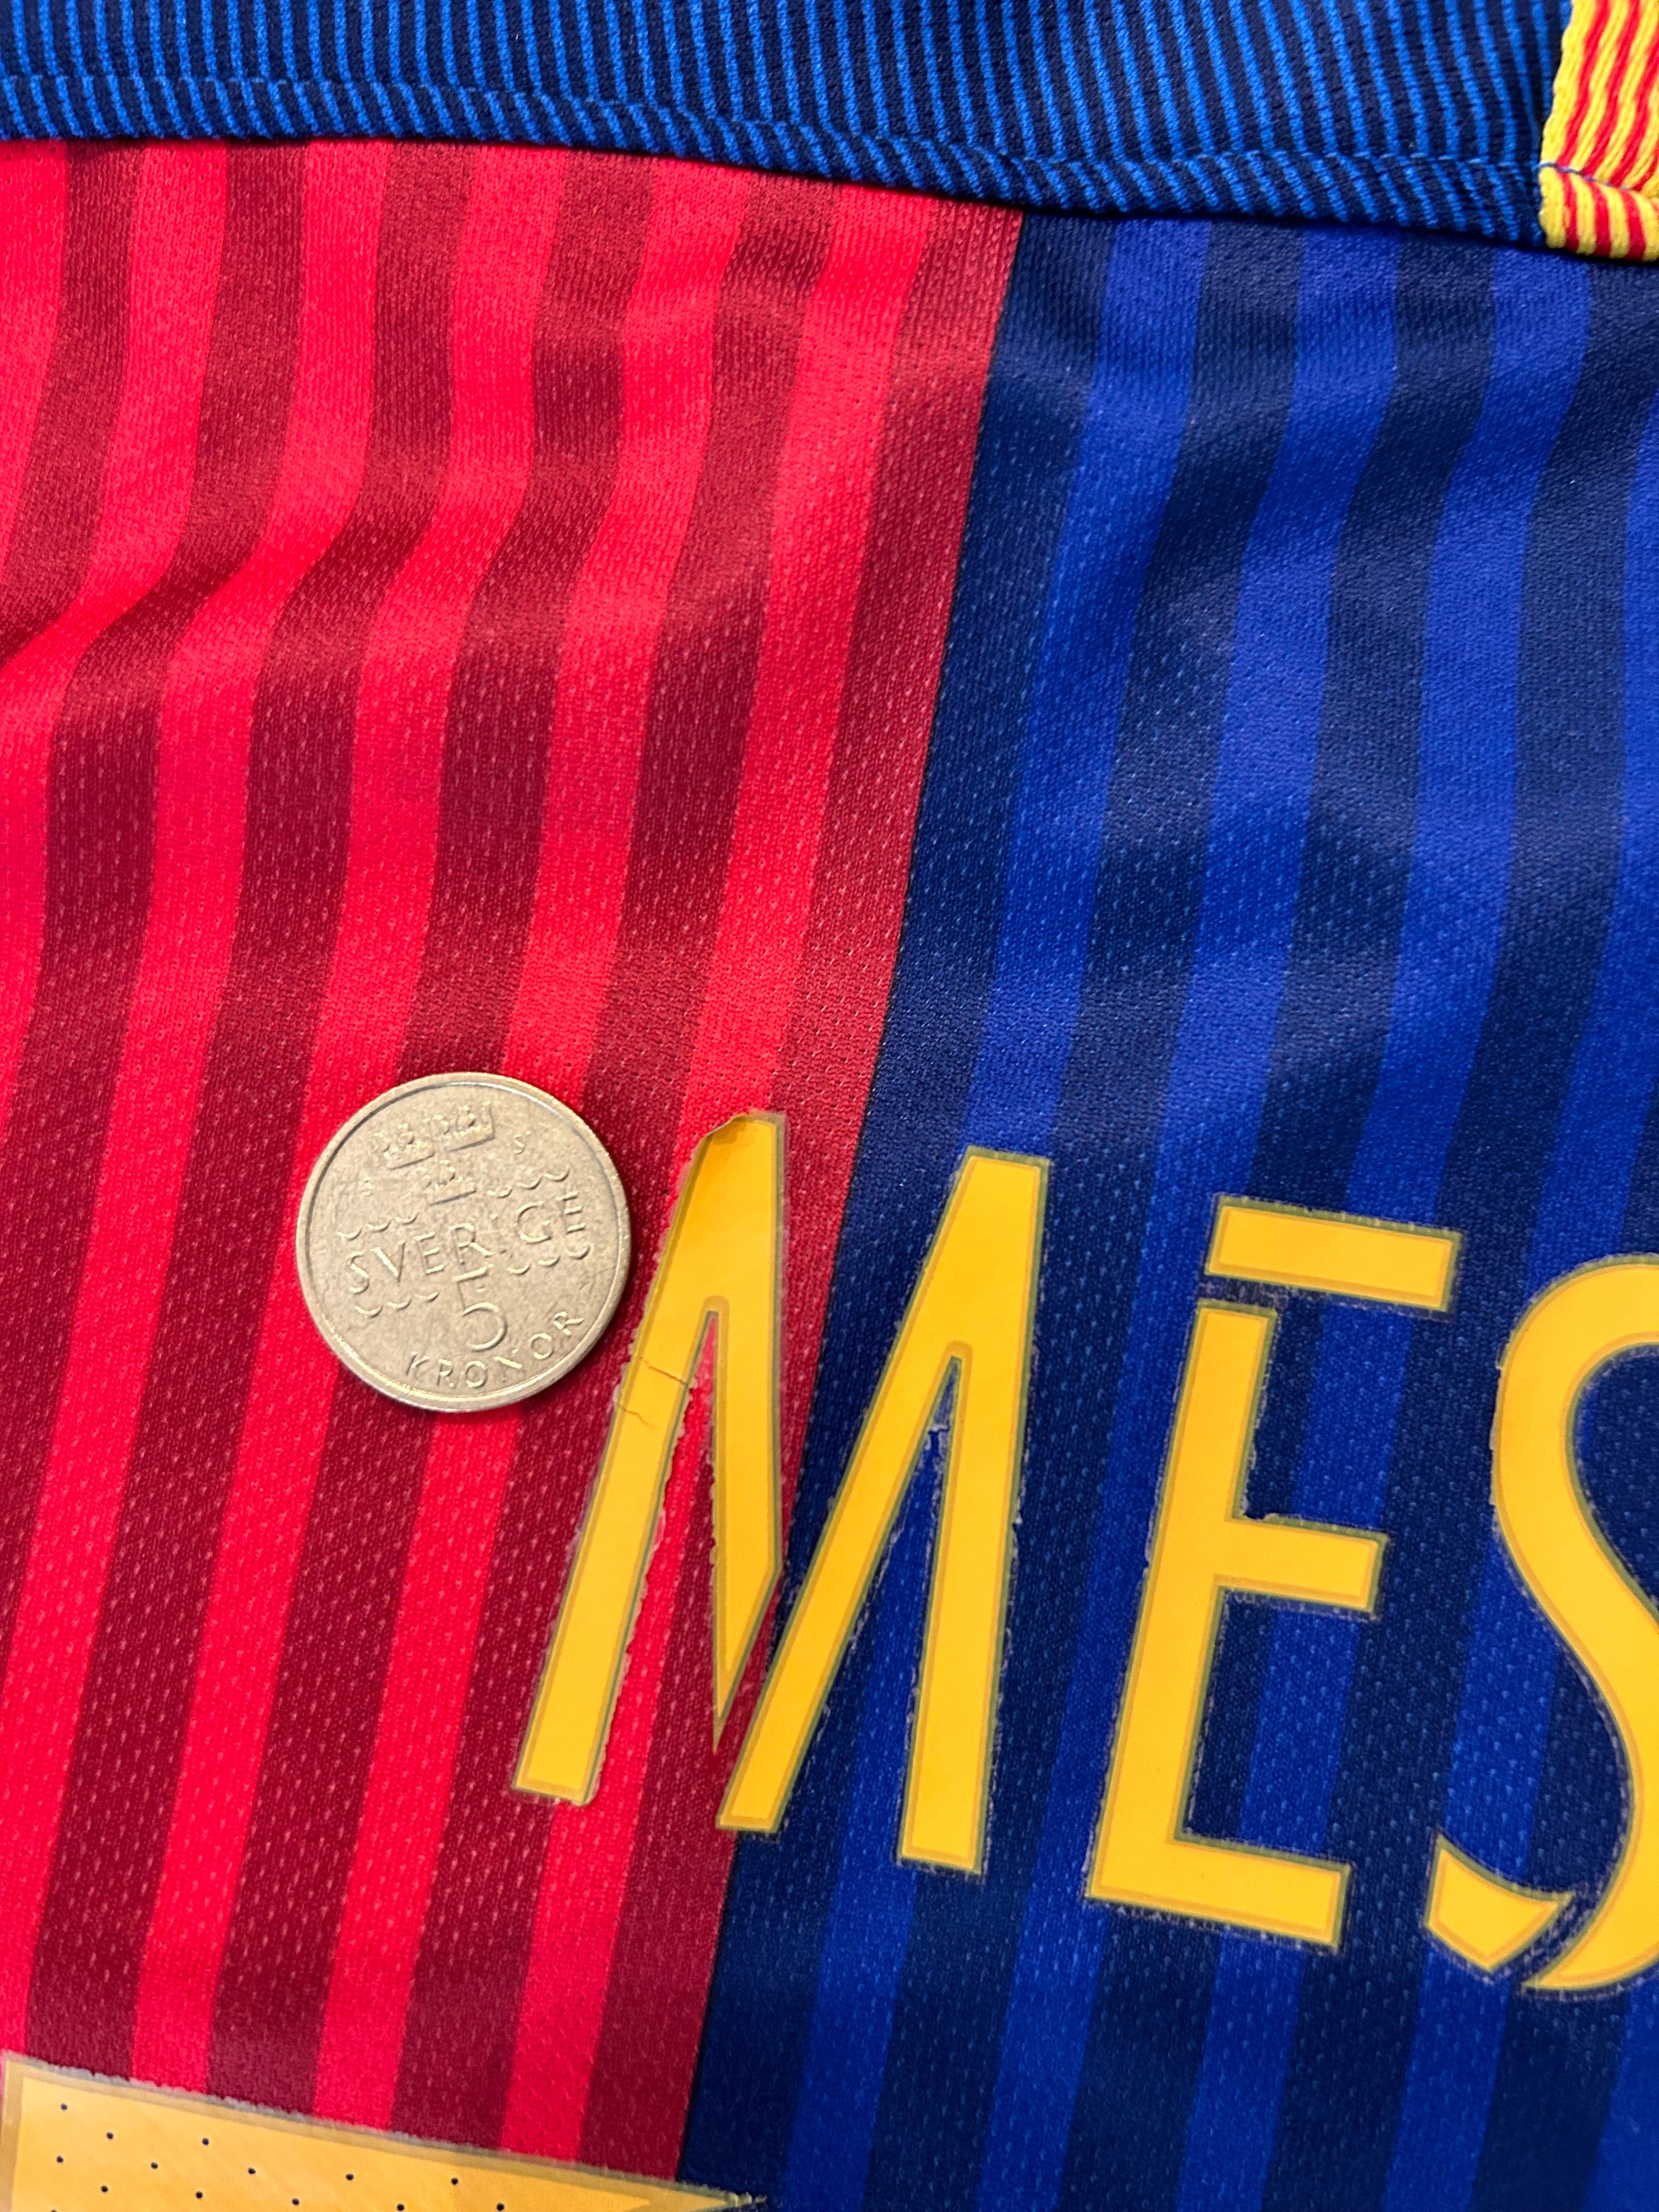 Nike - FC Barcelona 2016/17 Home Football Shirt 'MESSI'